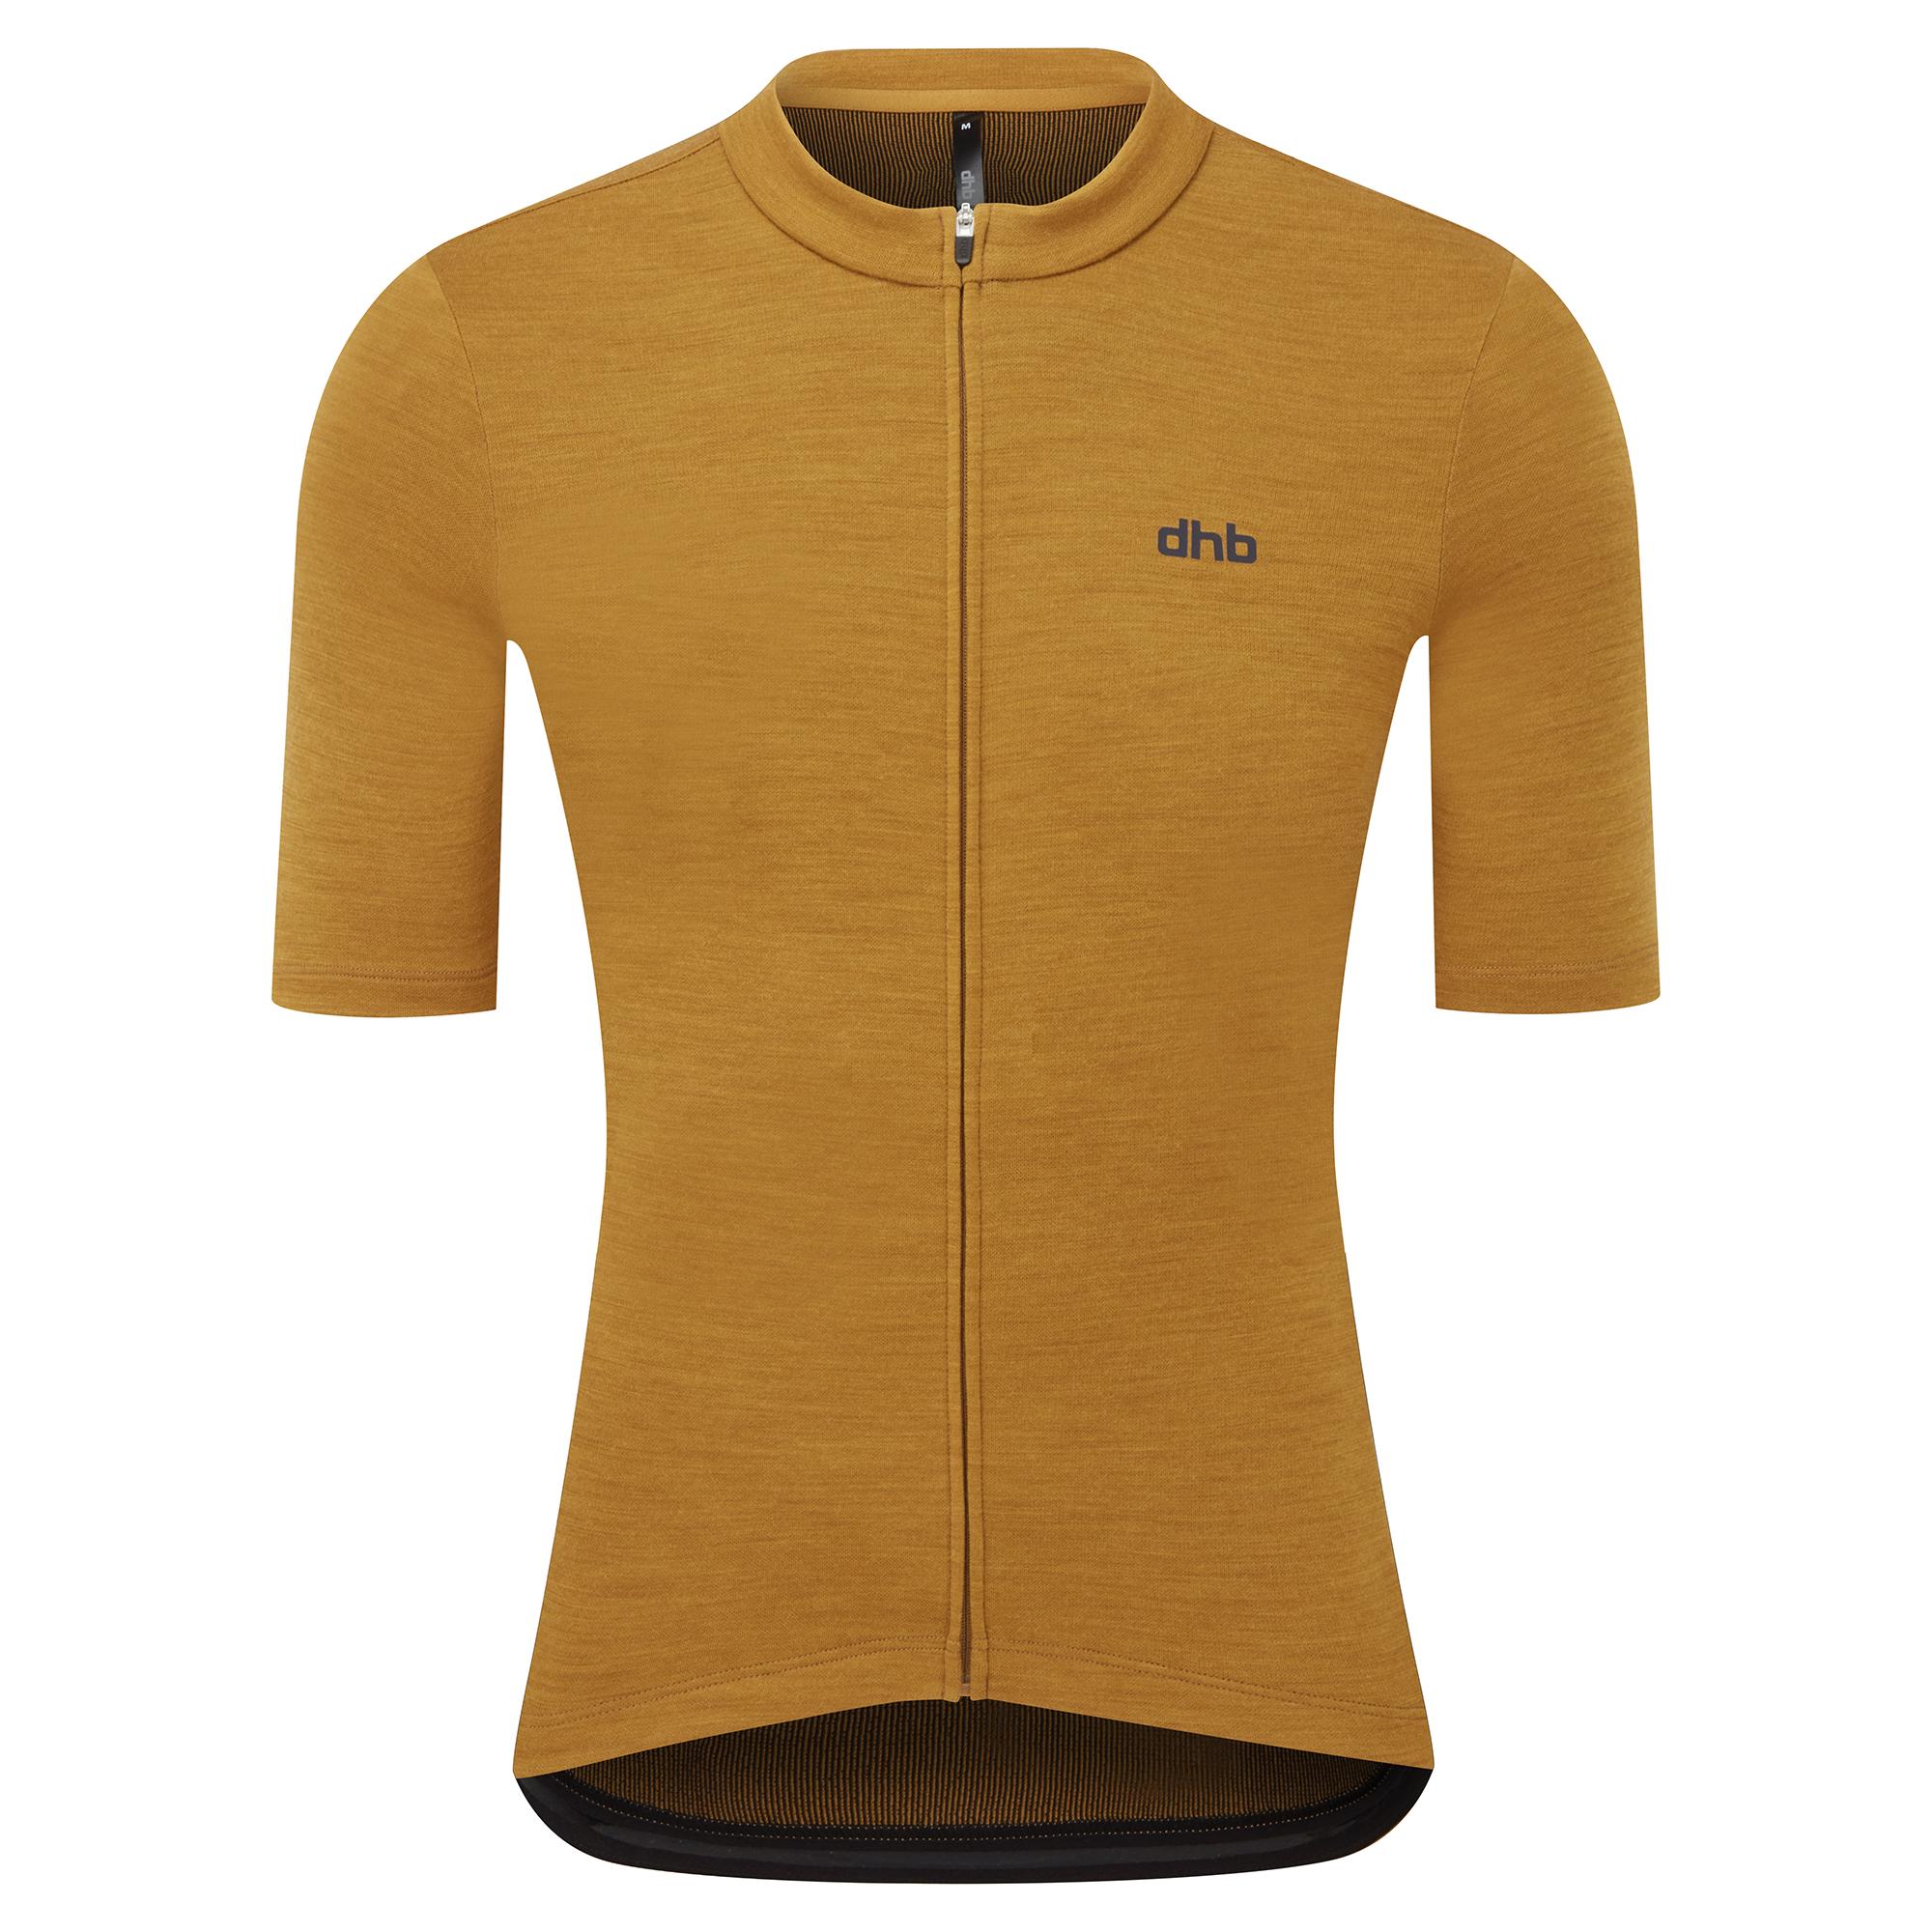 Dhb Merino Short Sleeve Jersey 2.0 - Golden Brown